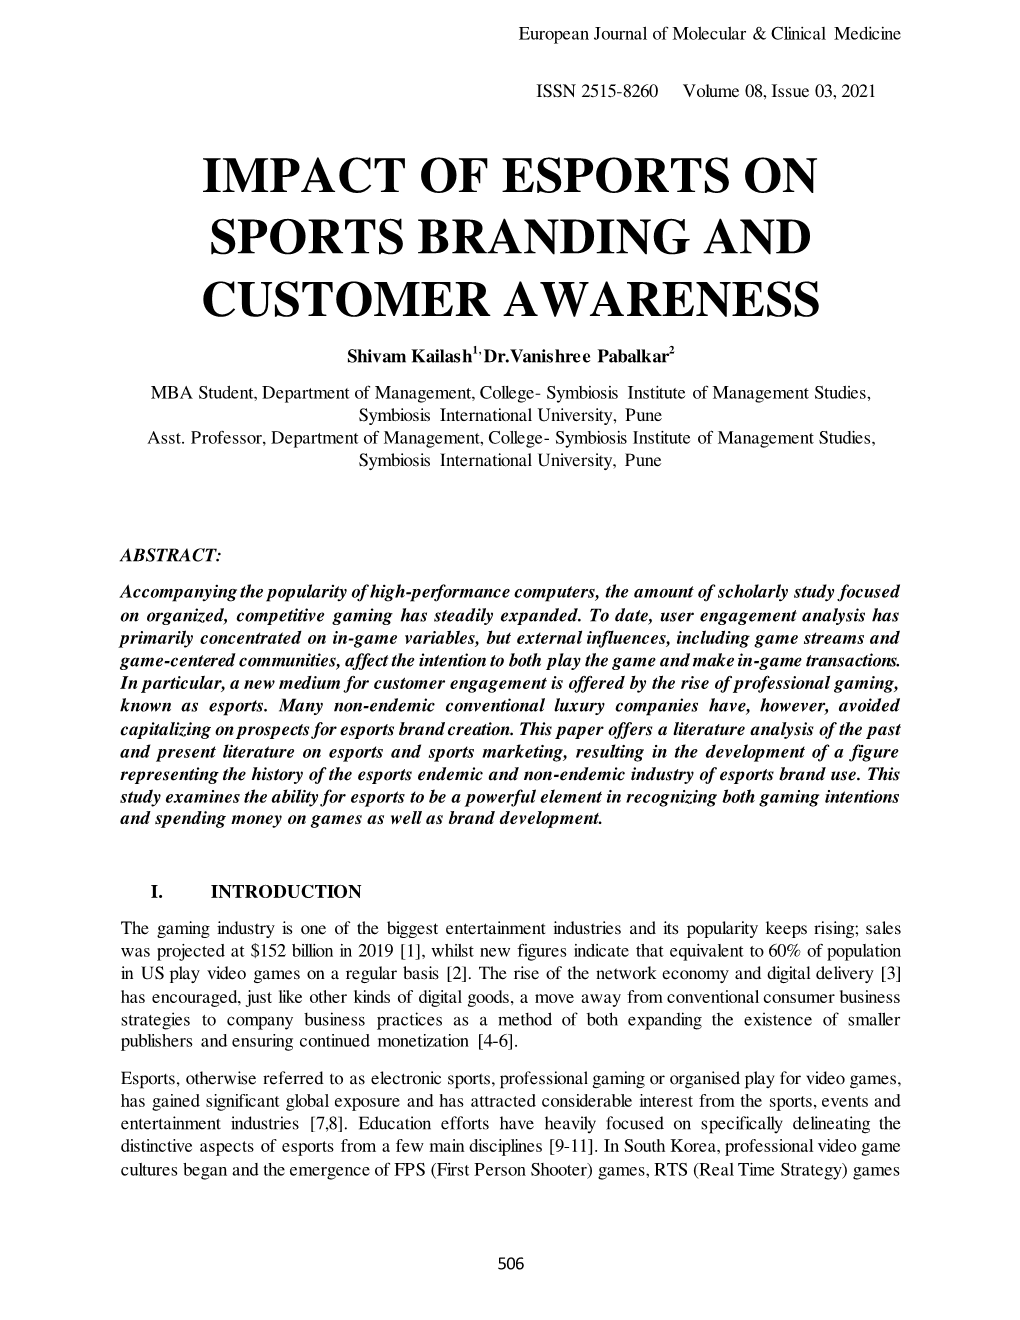 Impact of Esports on Sports Branding and Customer Awareness